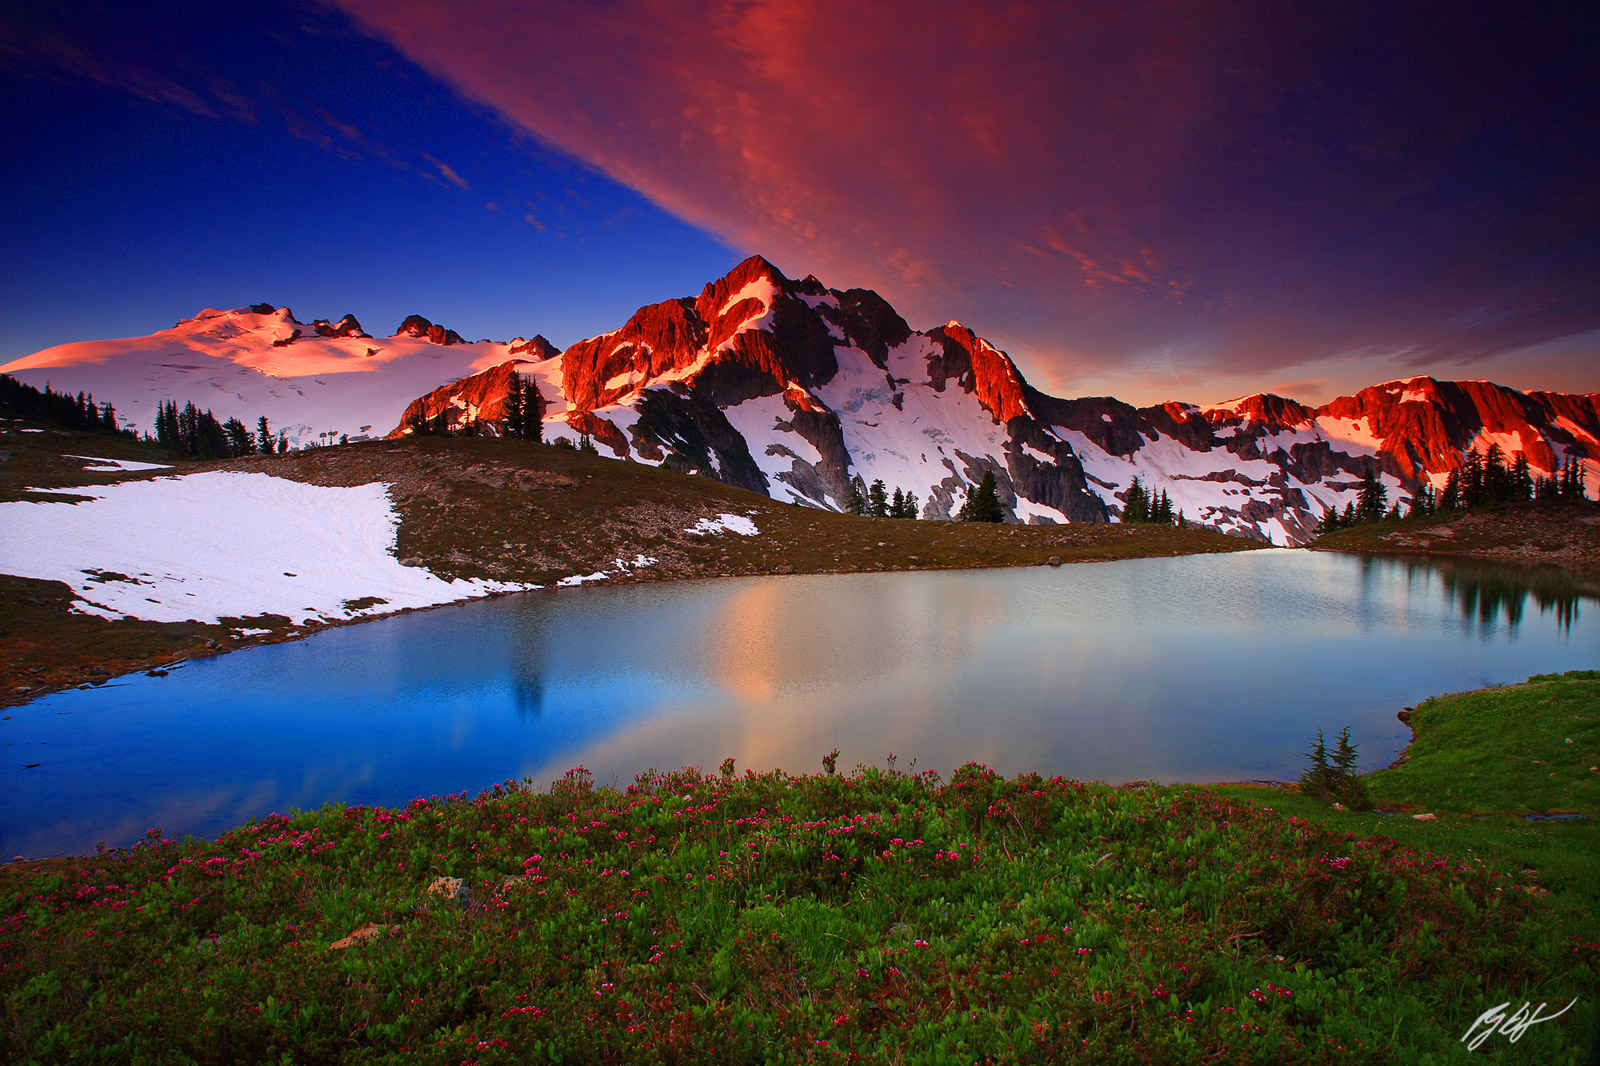 Sunrise Whatcom Peak and Mt Challenger with Taptoe Lakes, North Cascades National Park, Washington